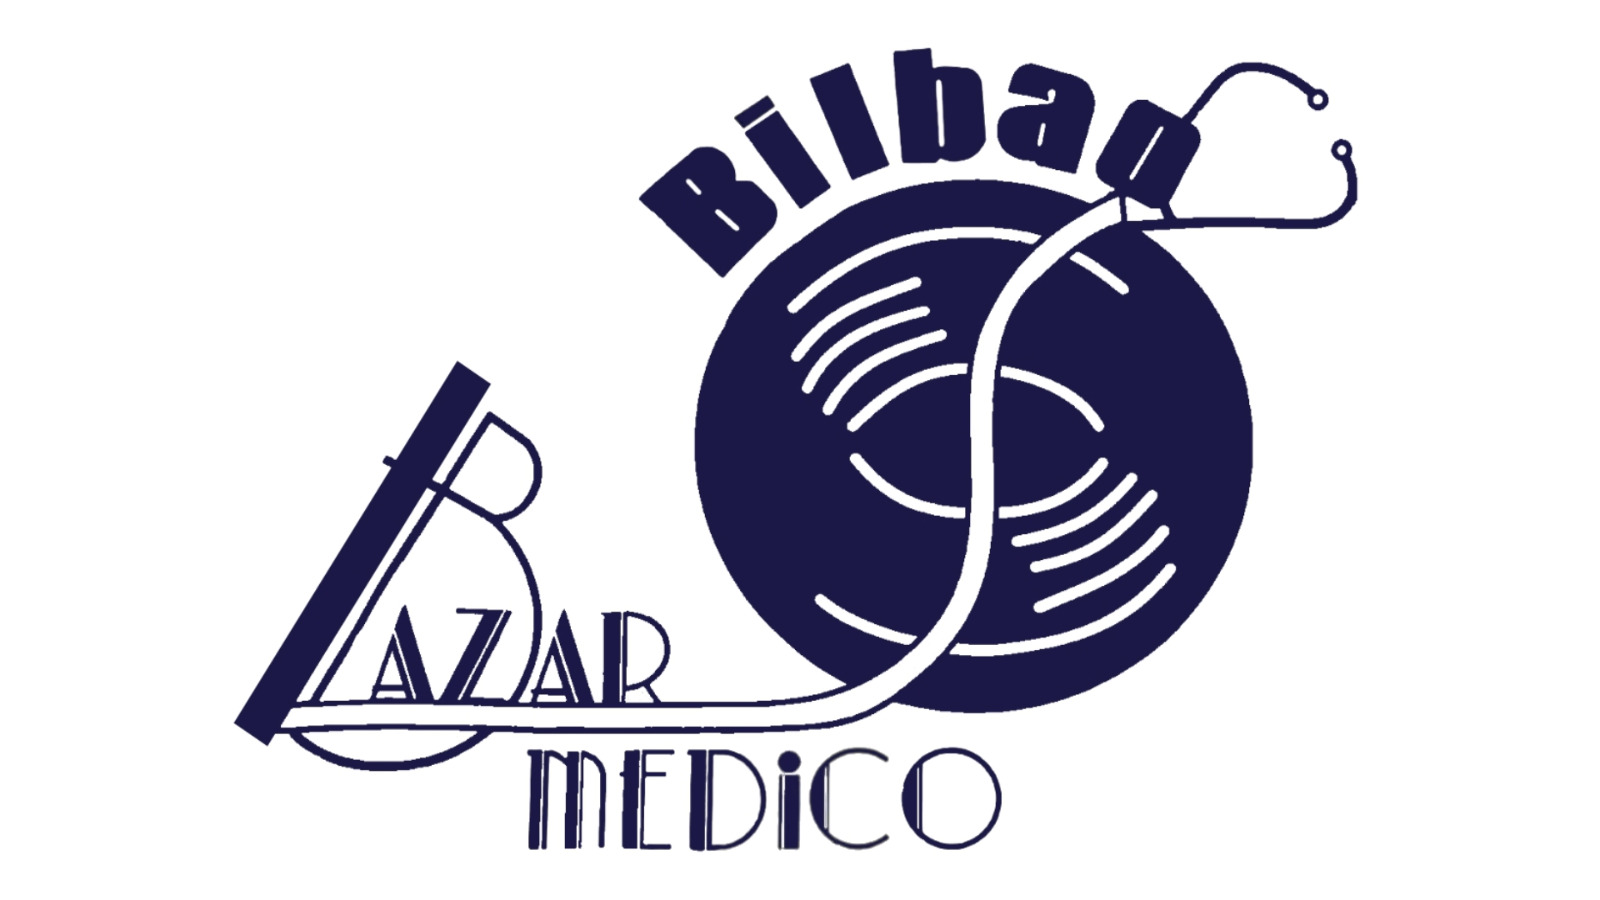 Images Bazar Médico Bilbao